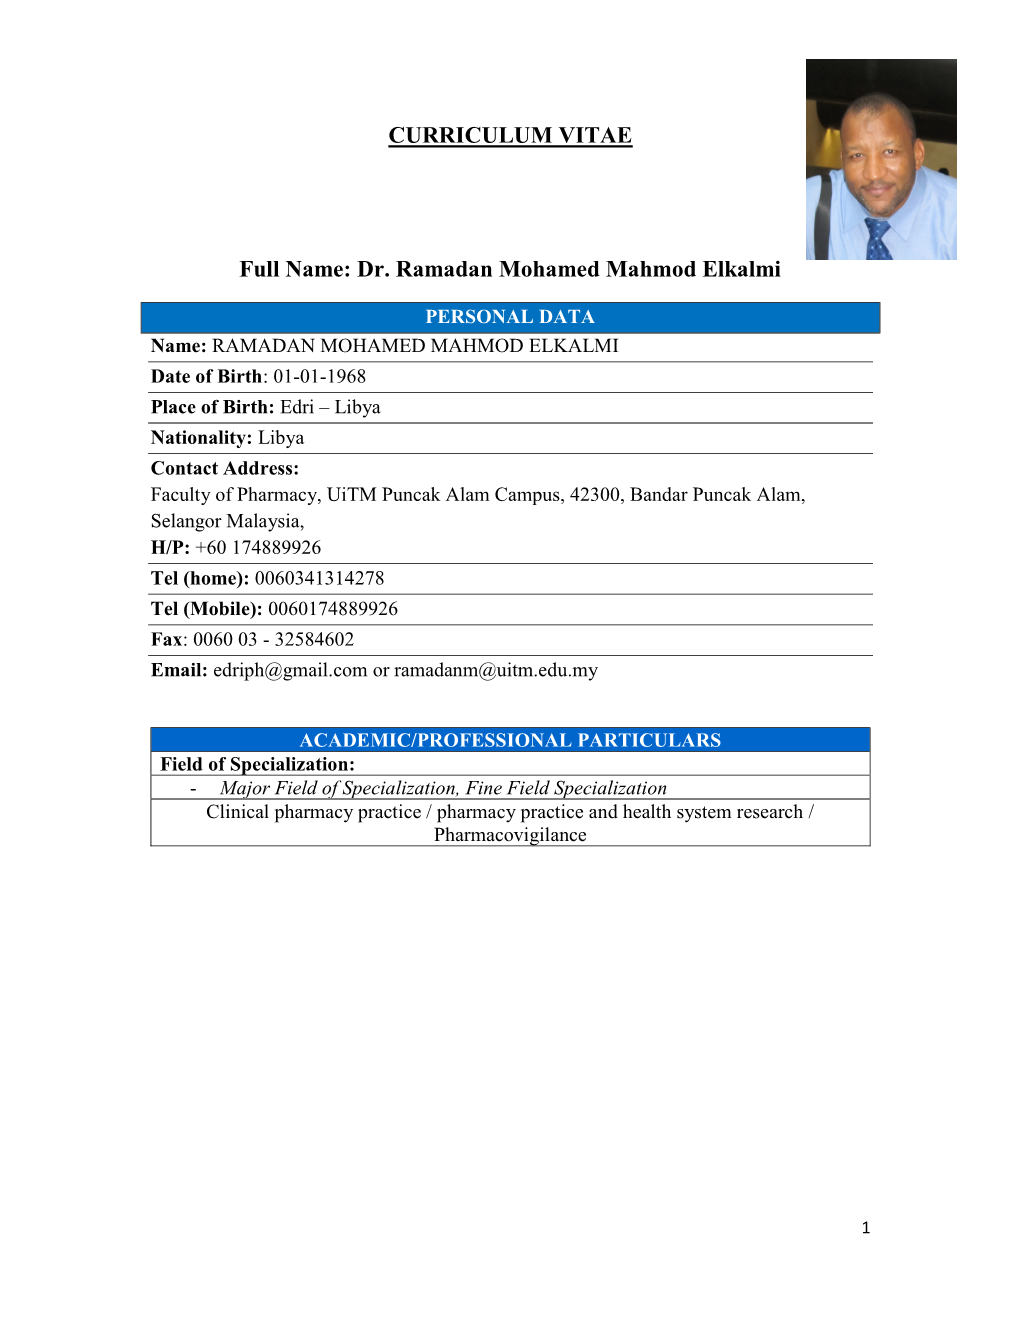 CURRICULUM VITAE Full Name: Dr. Ramadan Mohamed Mahmod Elkalmi